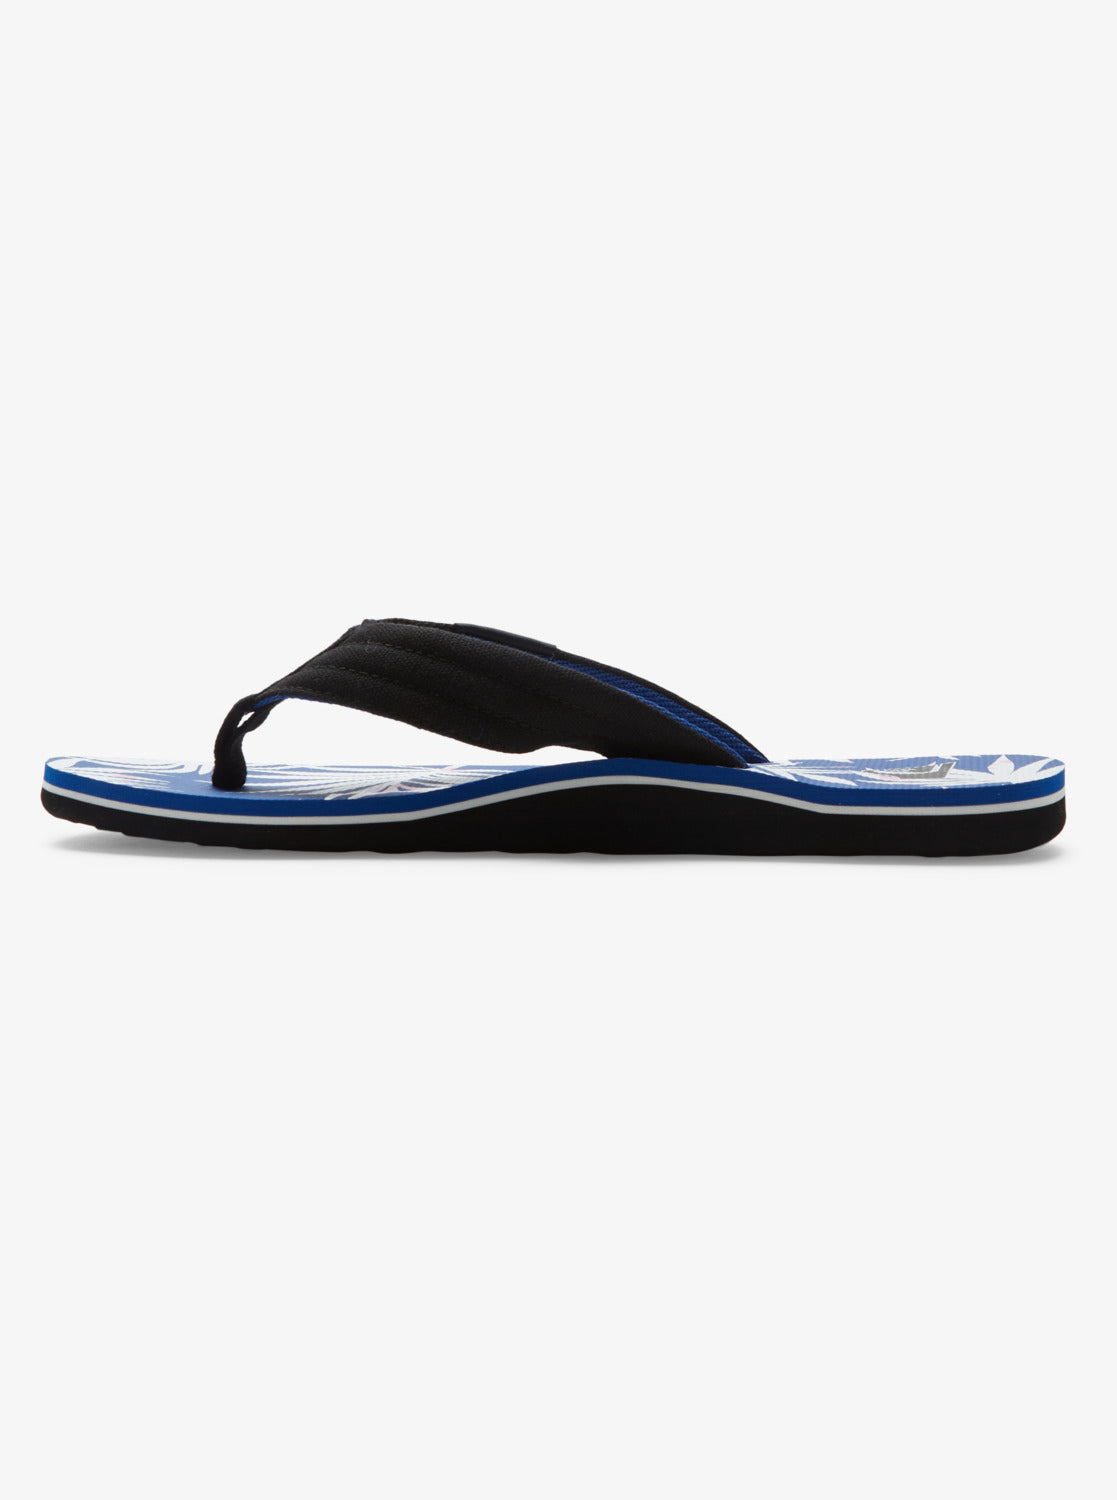 Buy Men's Blue Black Thong Style Casual Sandal (IX5005) Online